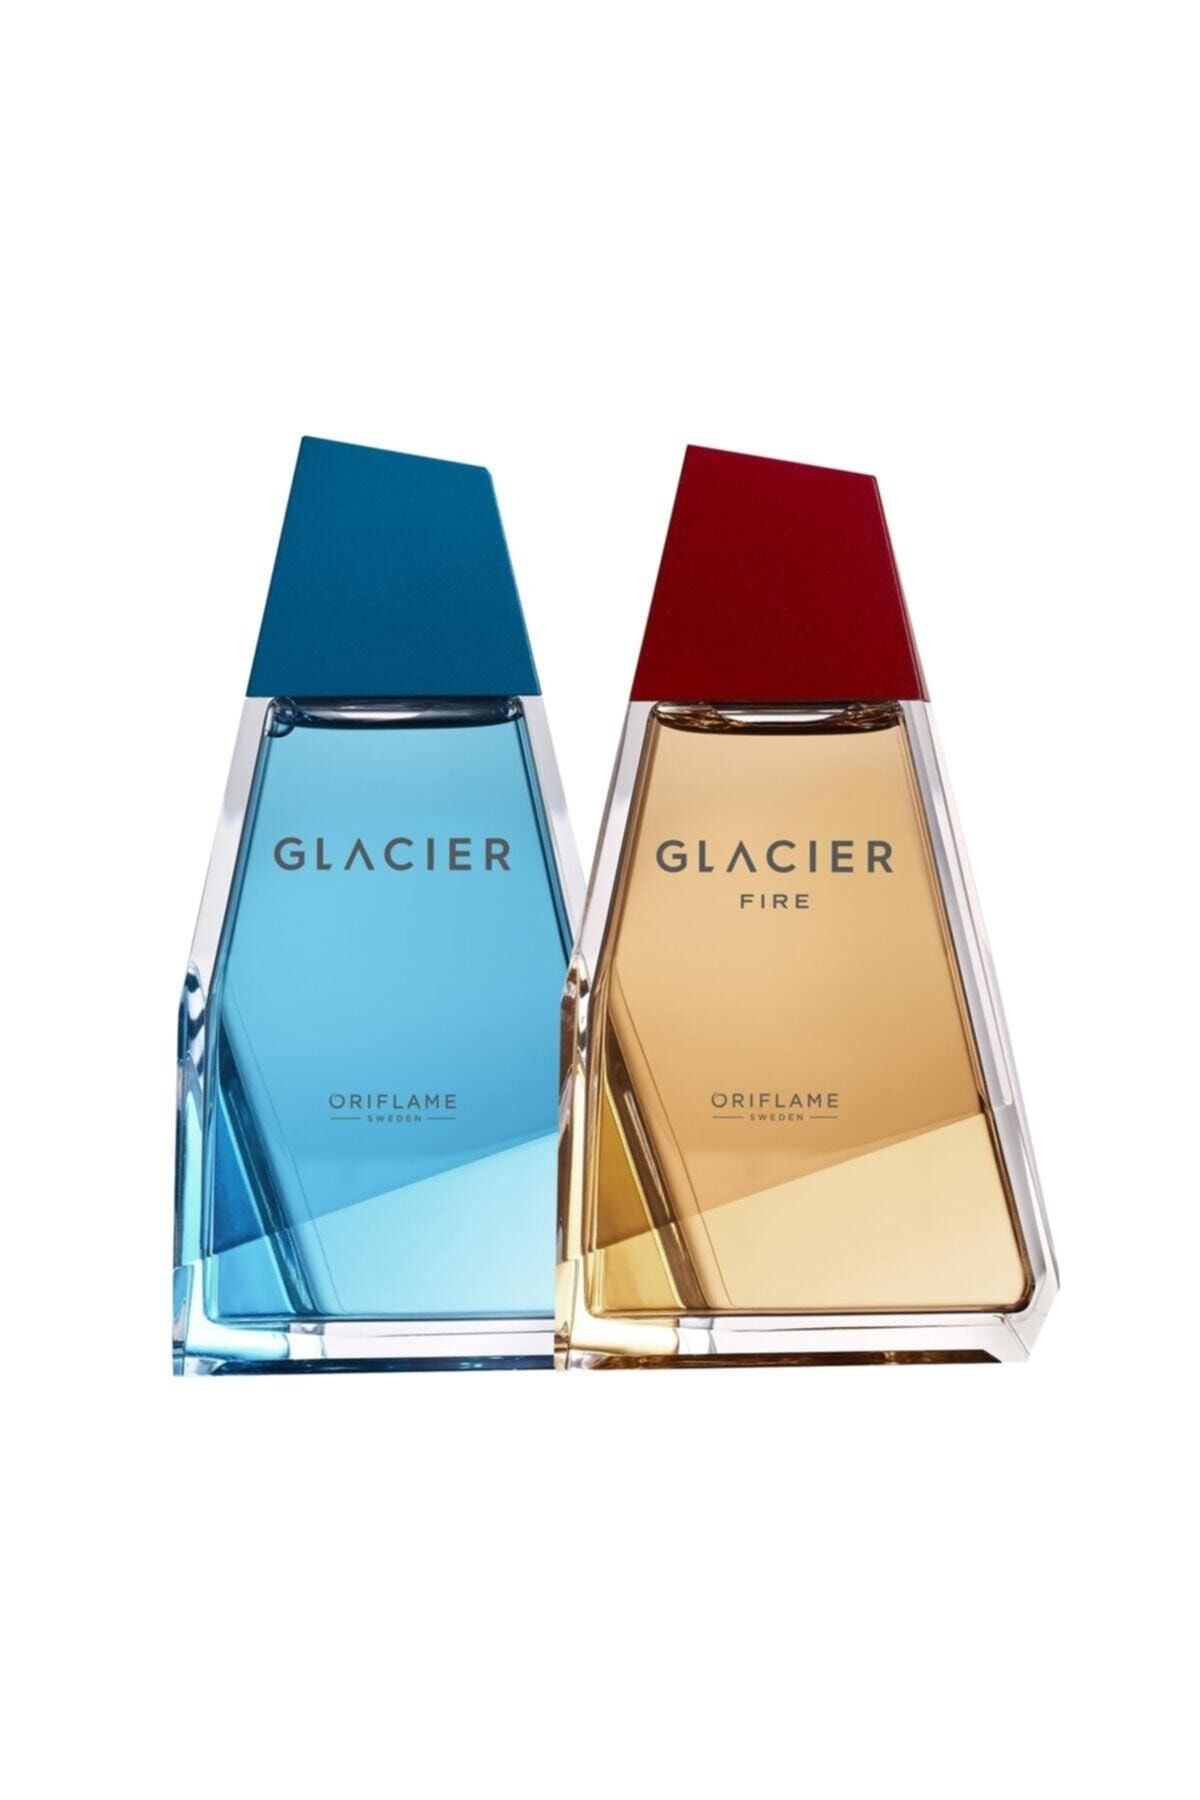 Oriflame Glacier Edt 100ml Erkek Parfüm + Glacier Fire Edt 100ml Erkek Parfüm Set